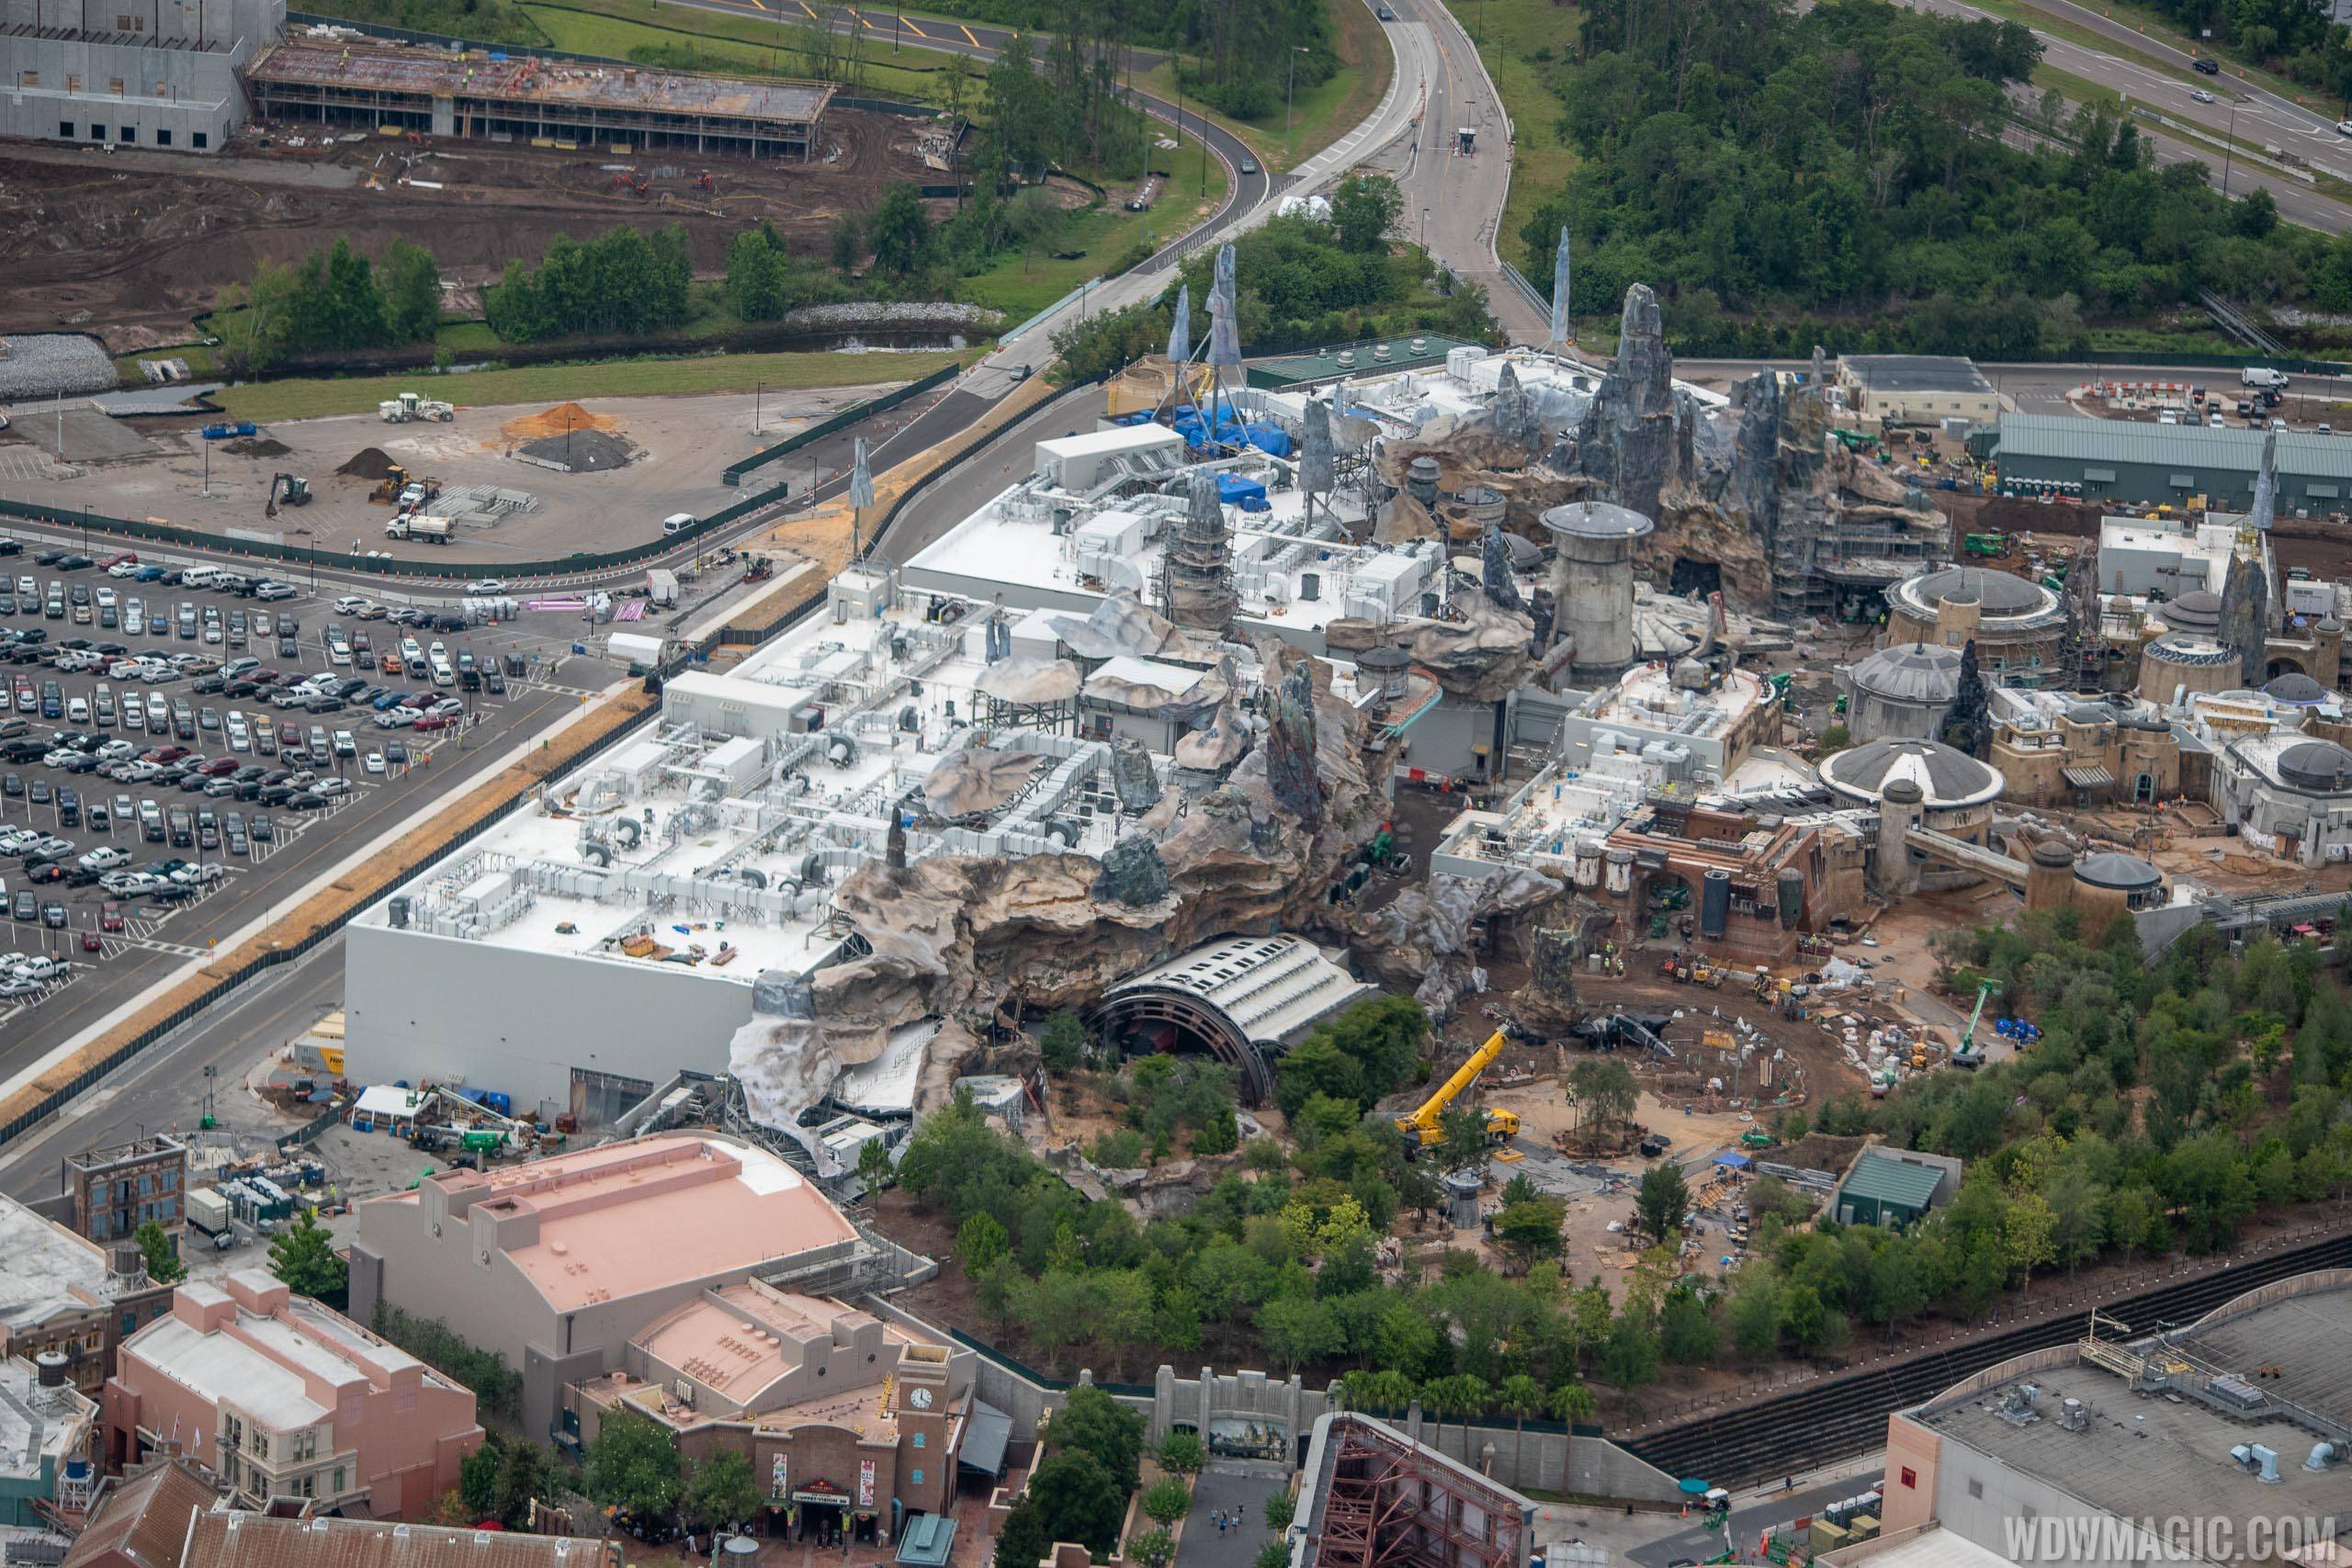 Star Wars hotel construction at Walt Disney World - June 2019